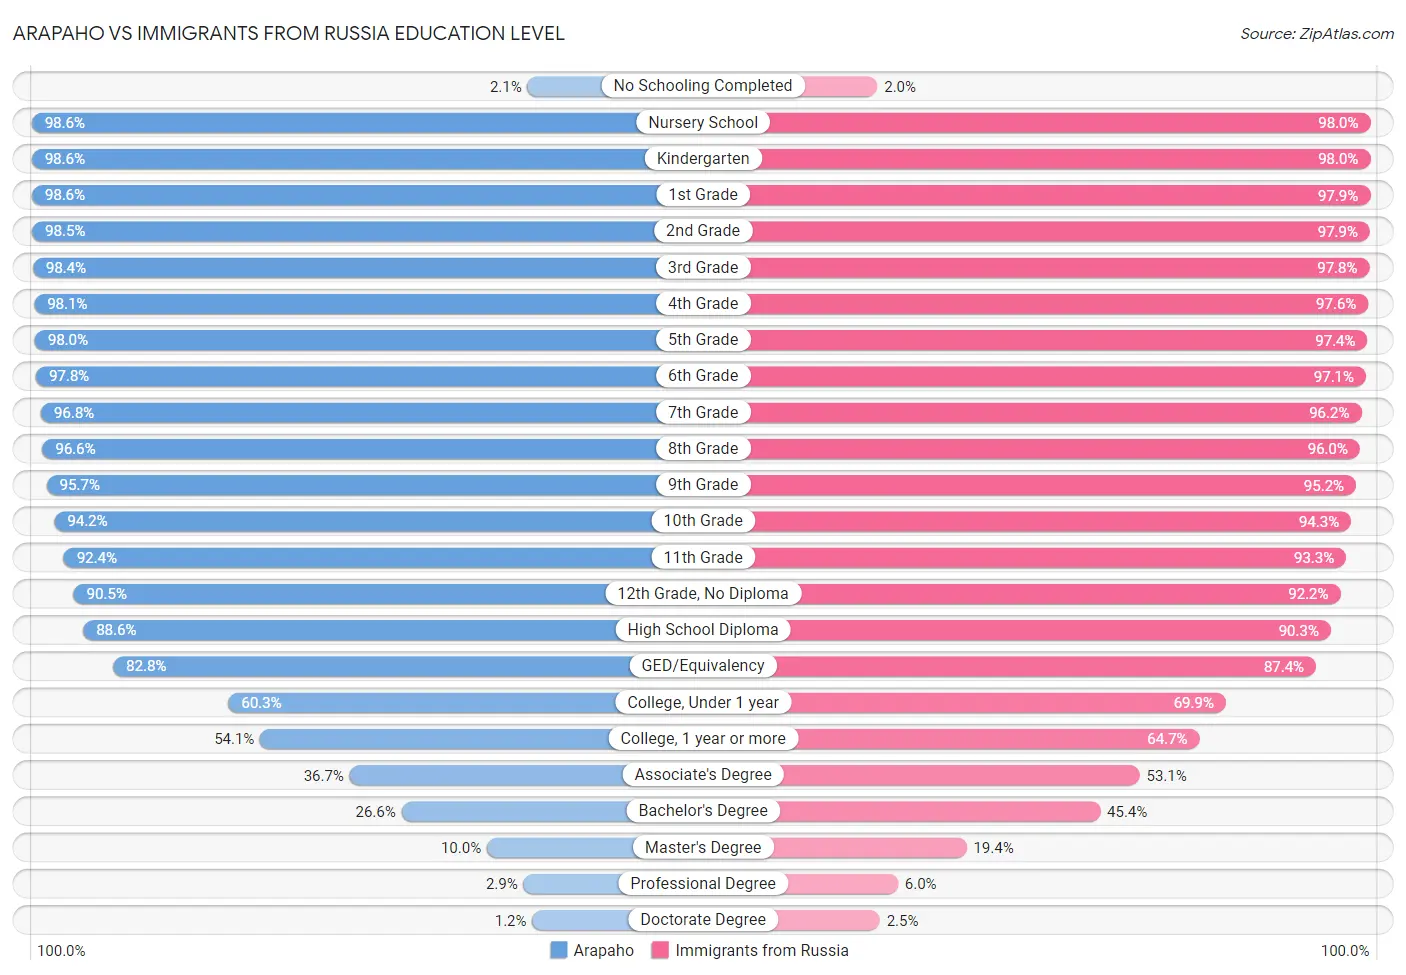 Arapaho vs Immigrants from Russia Education Level